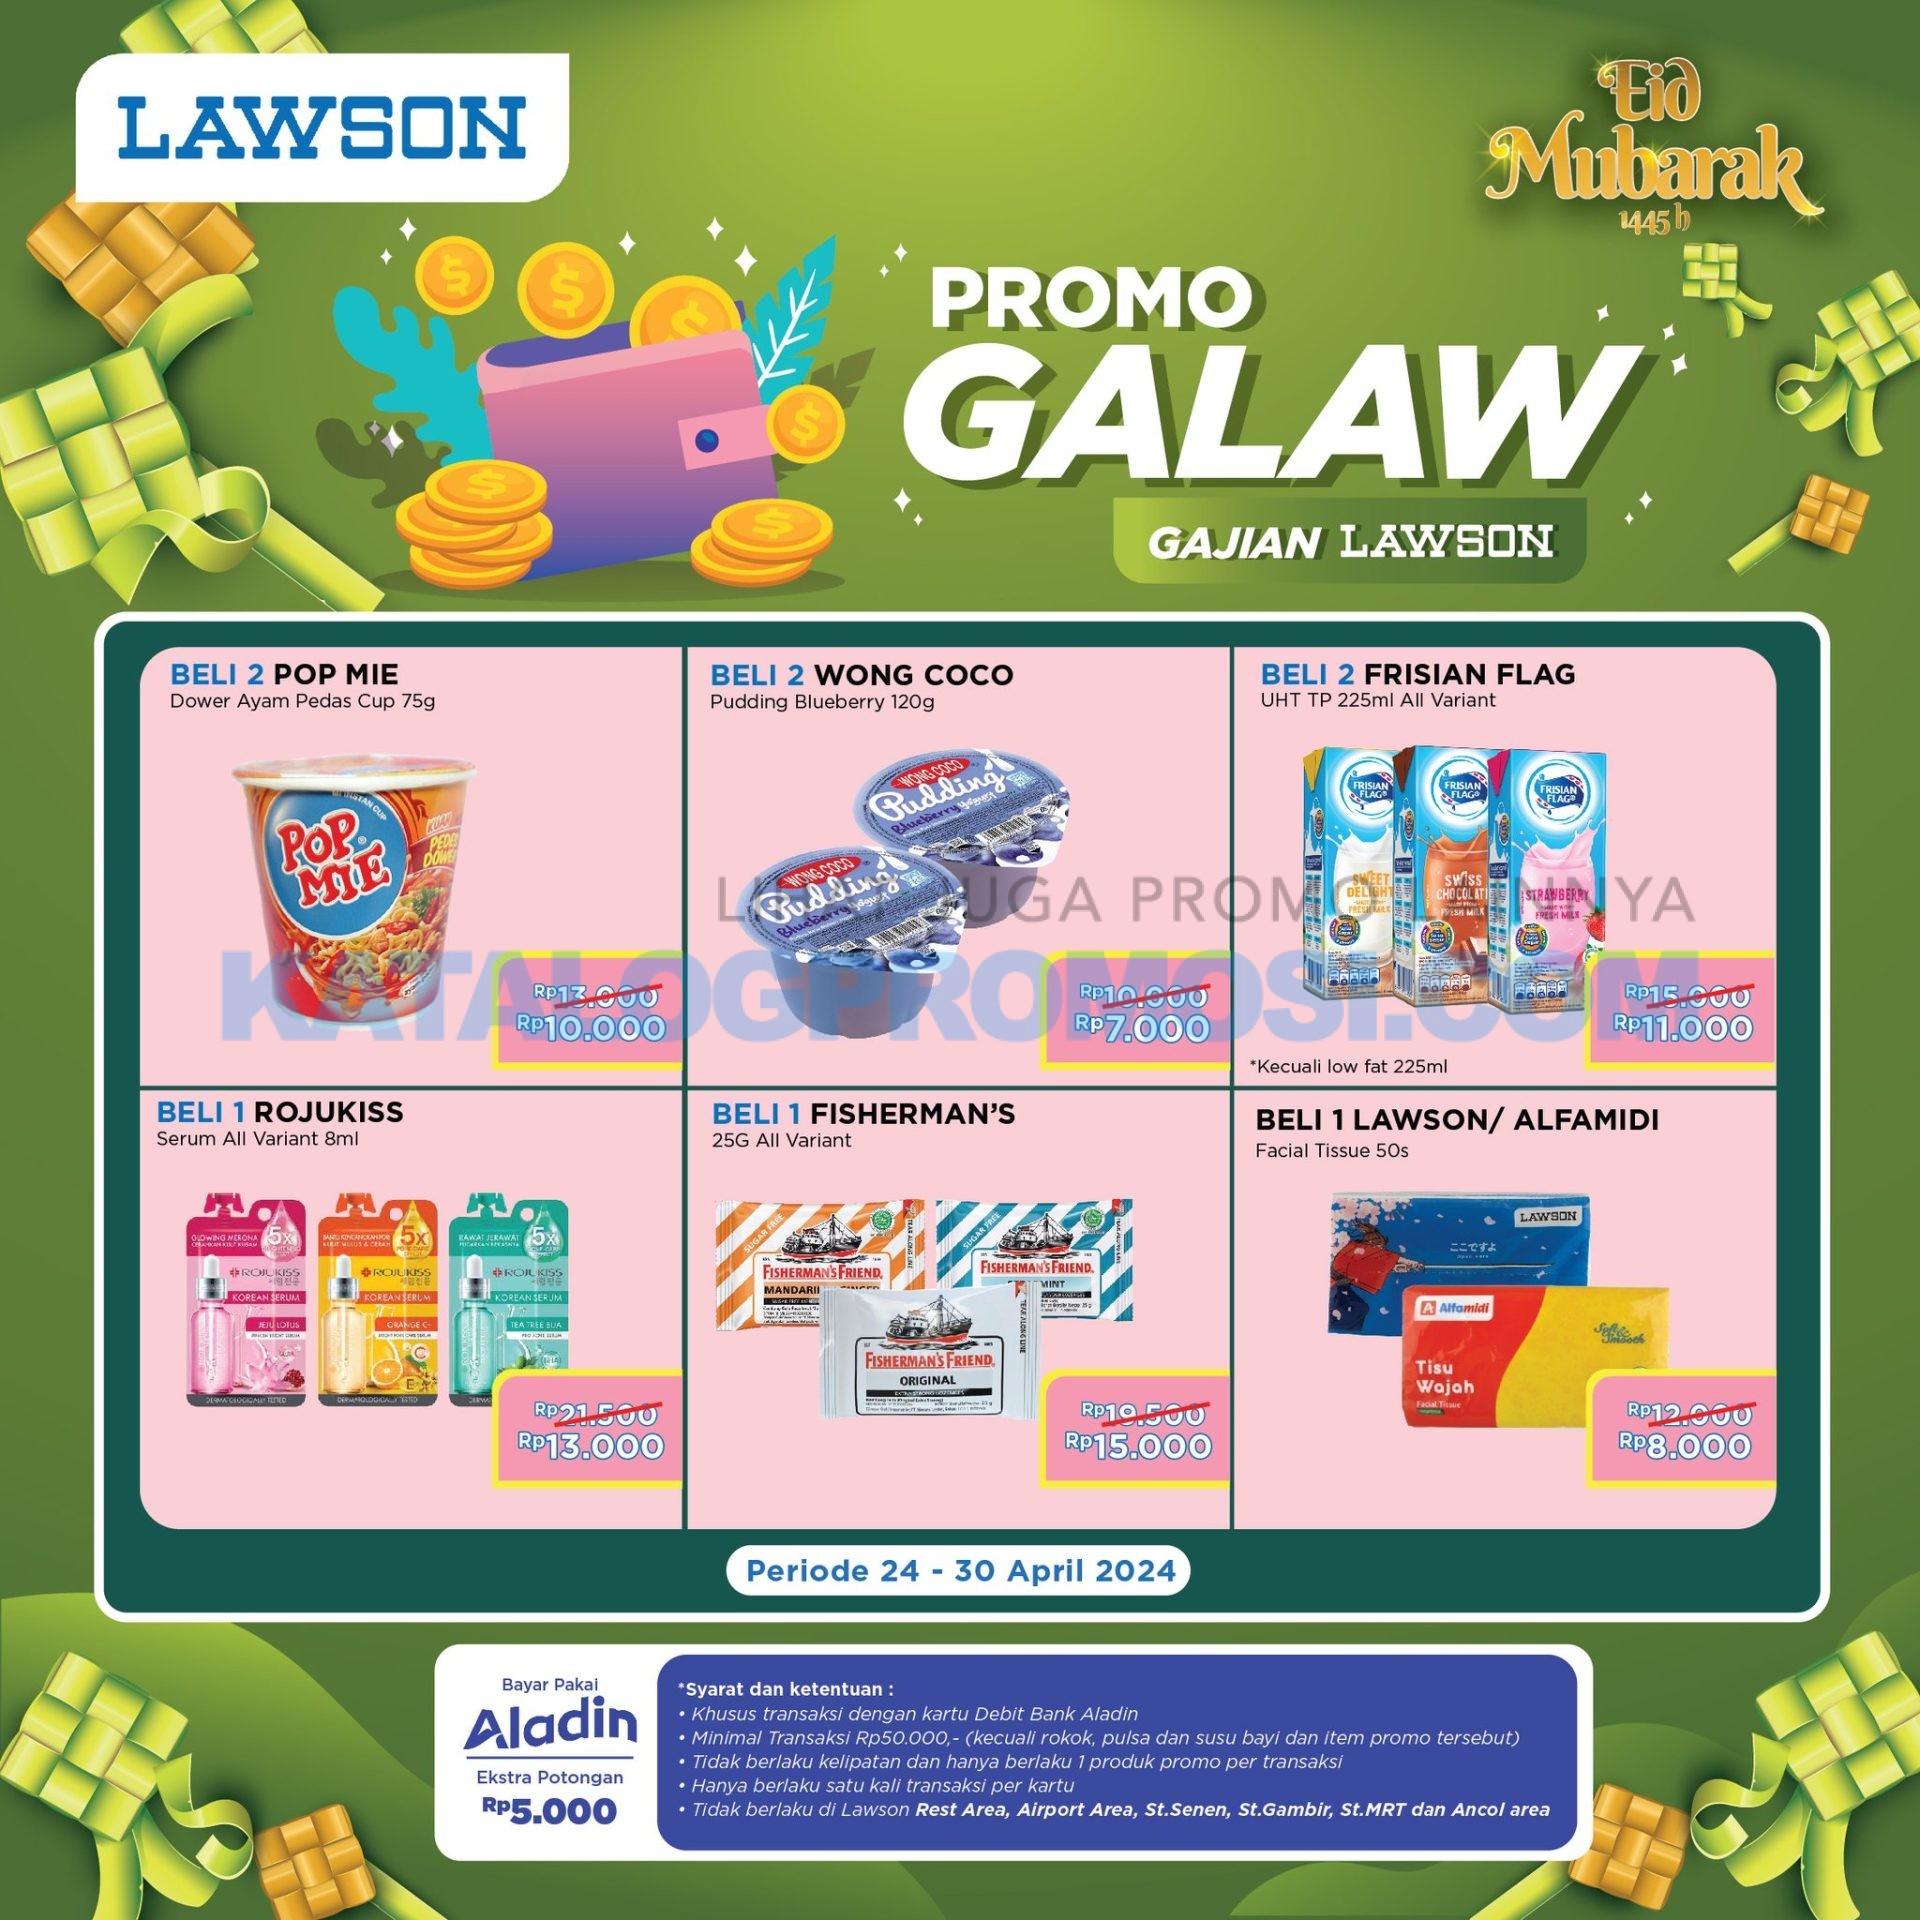 LAWSON Promo GALAW (Gajian Lawson) - Harga Spesial Produk Pilihan + Potongan Tambahan* berlaku tanggal 24-30 April 2024